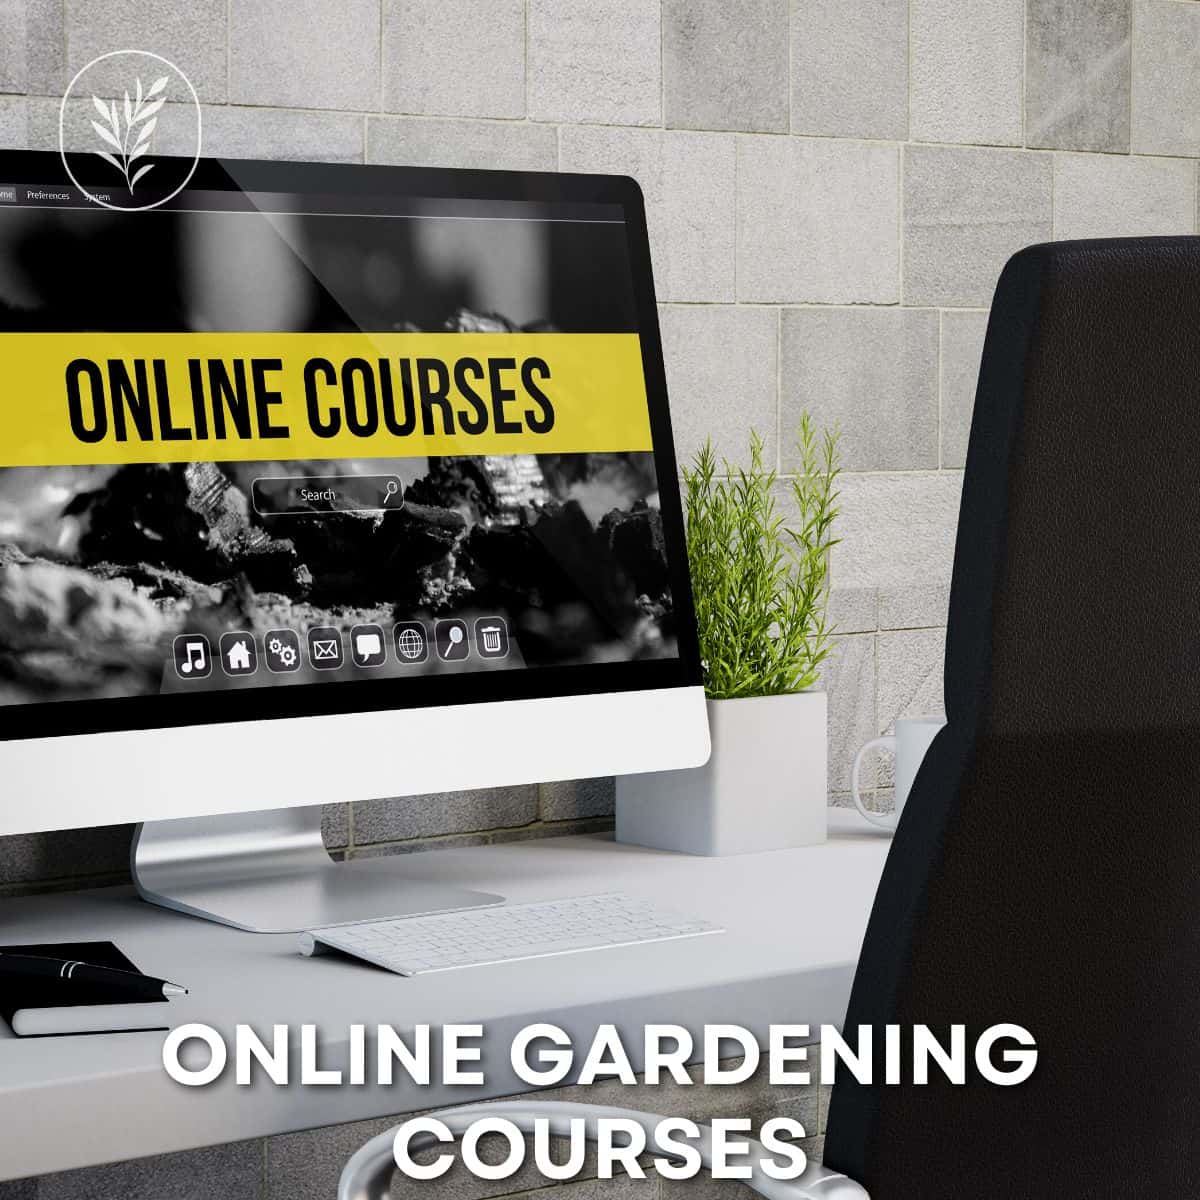 Online gardening courses via @home4theharvest